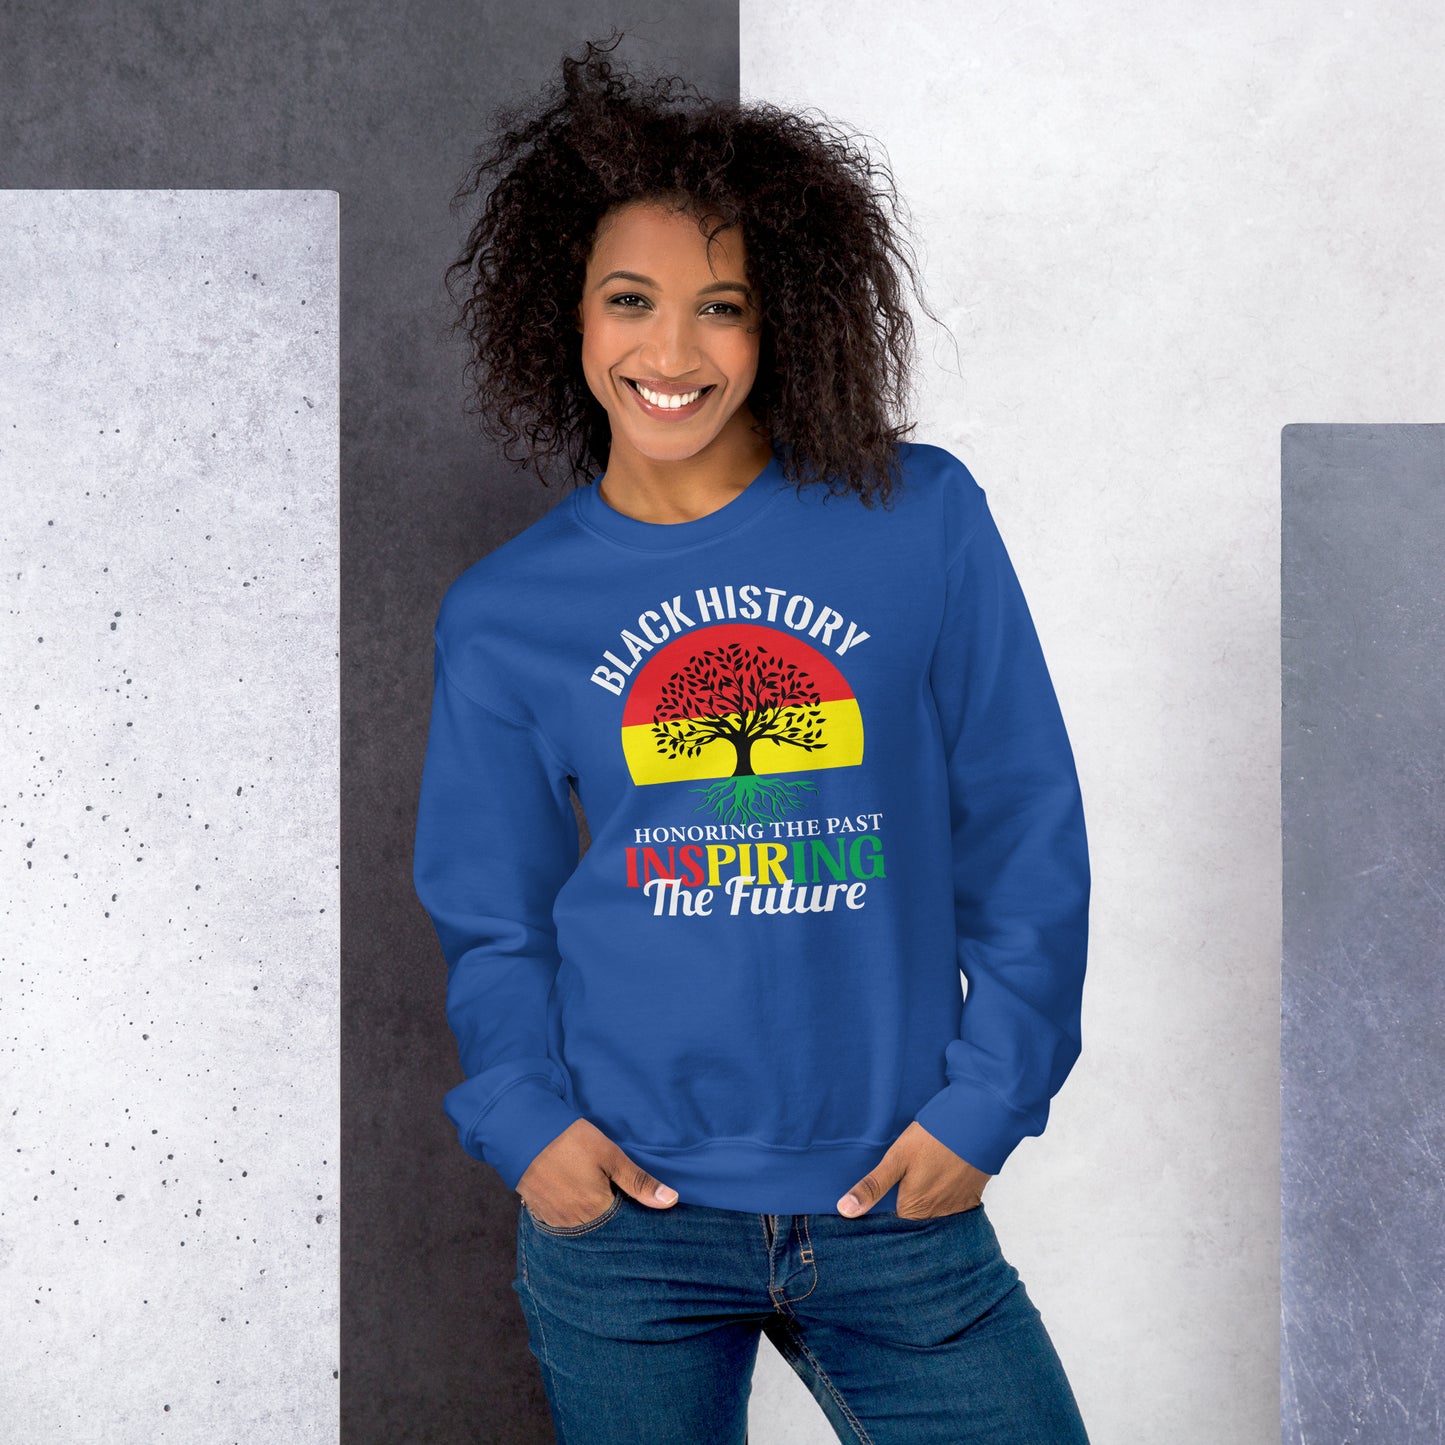 Black History Inspiring the Future Unisex Sweatshirt